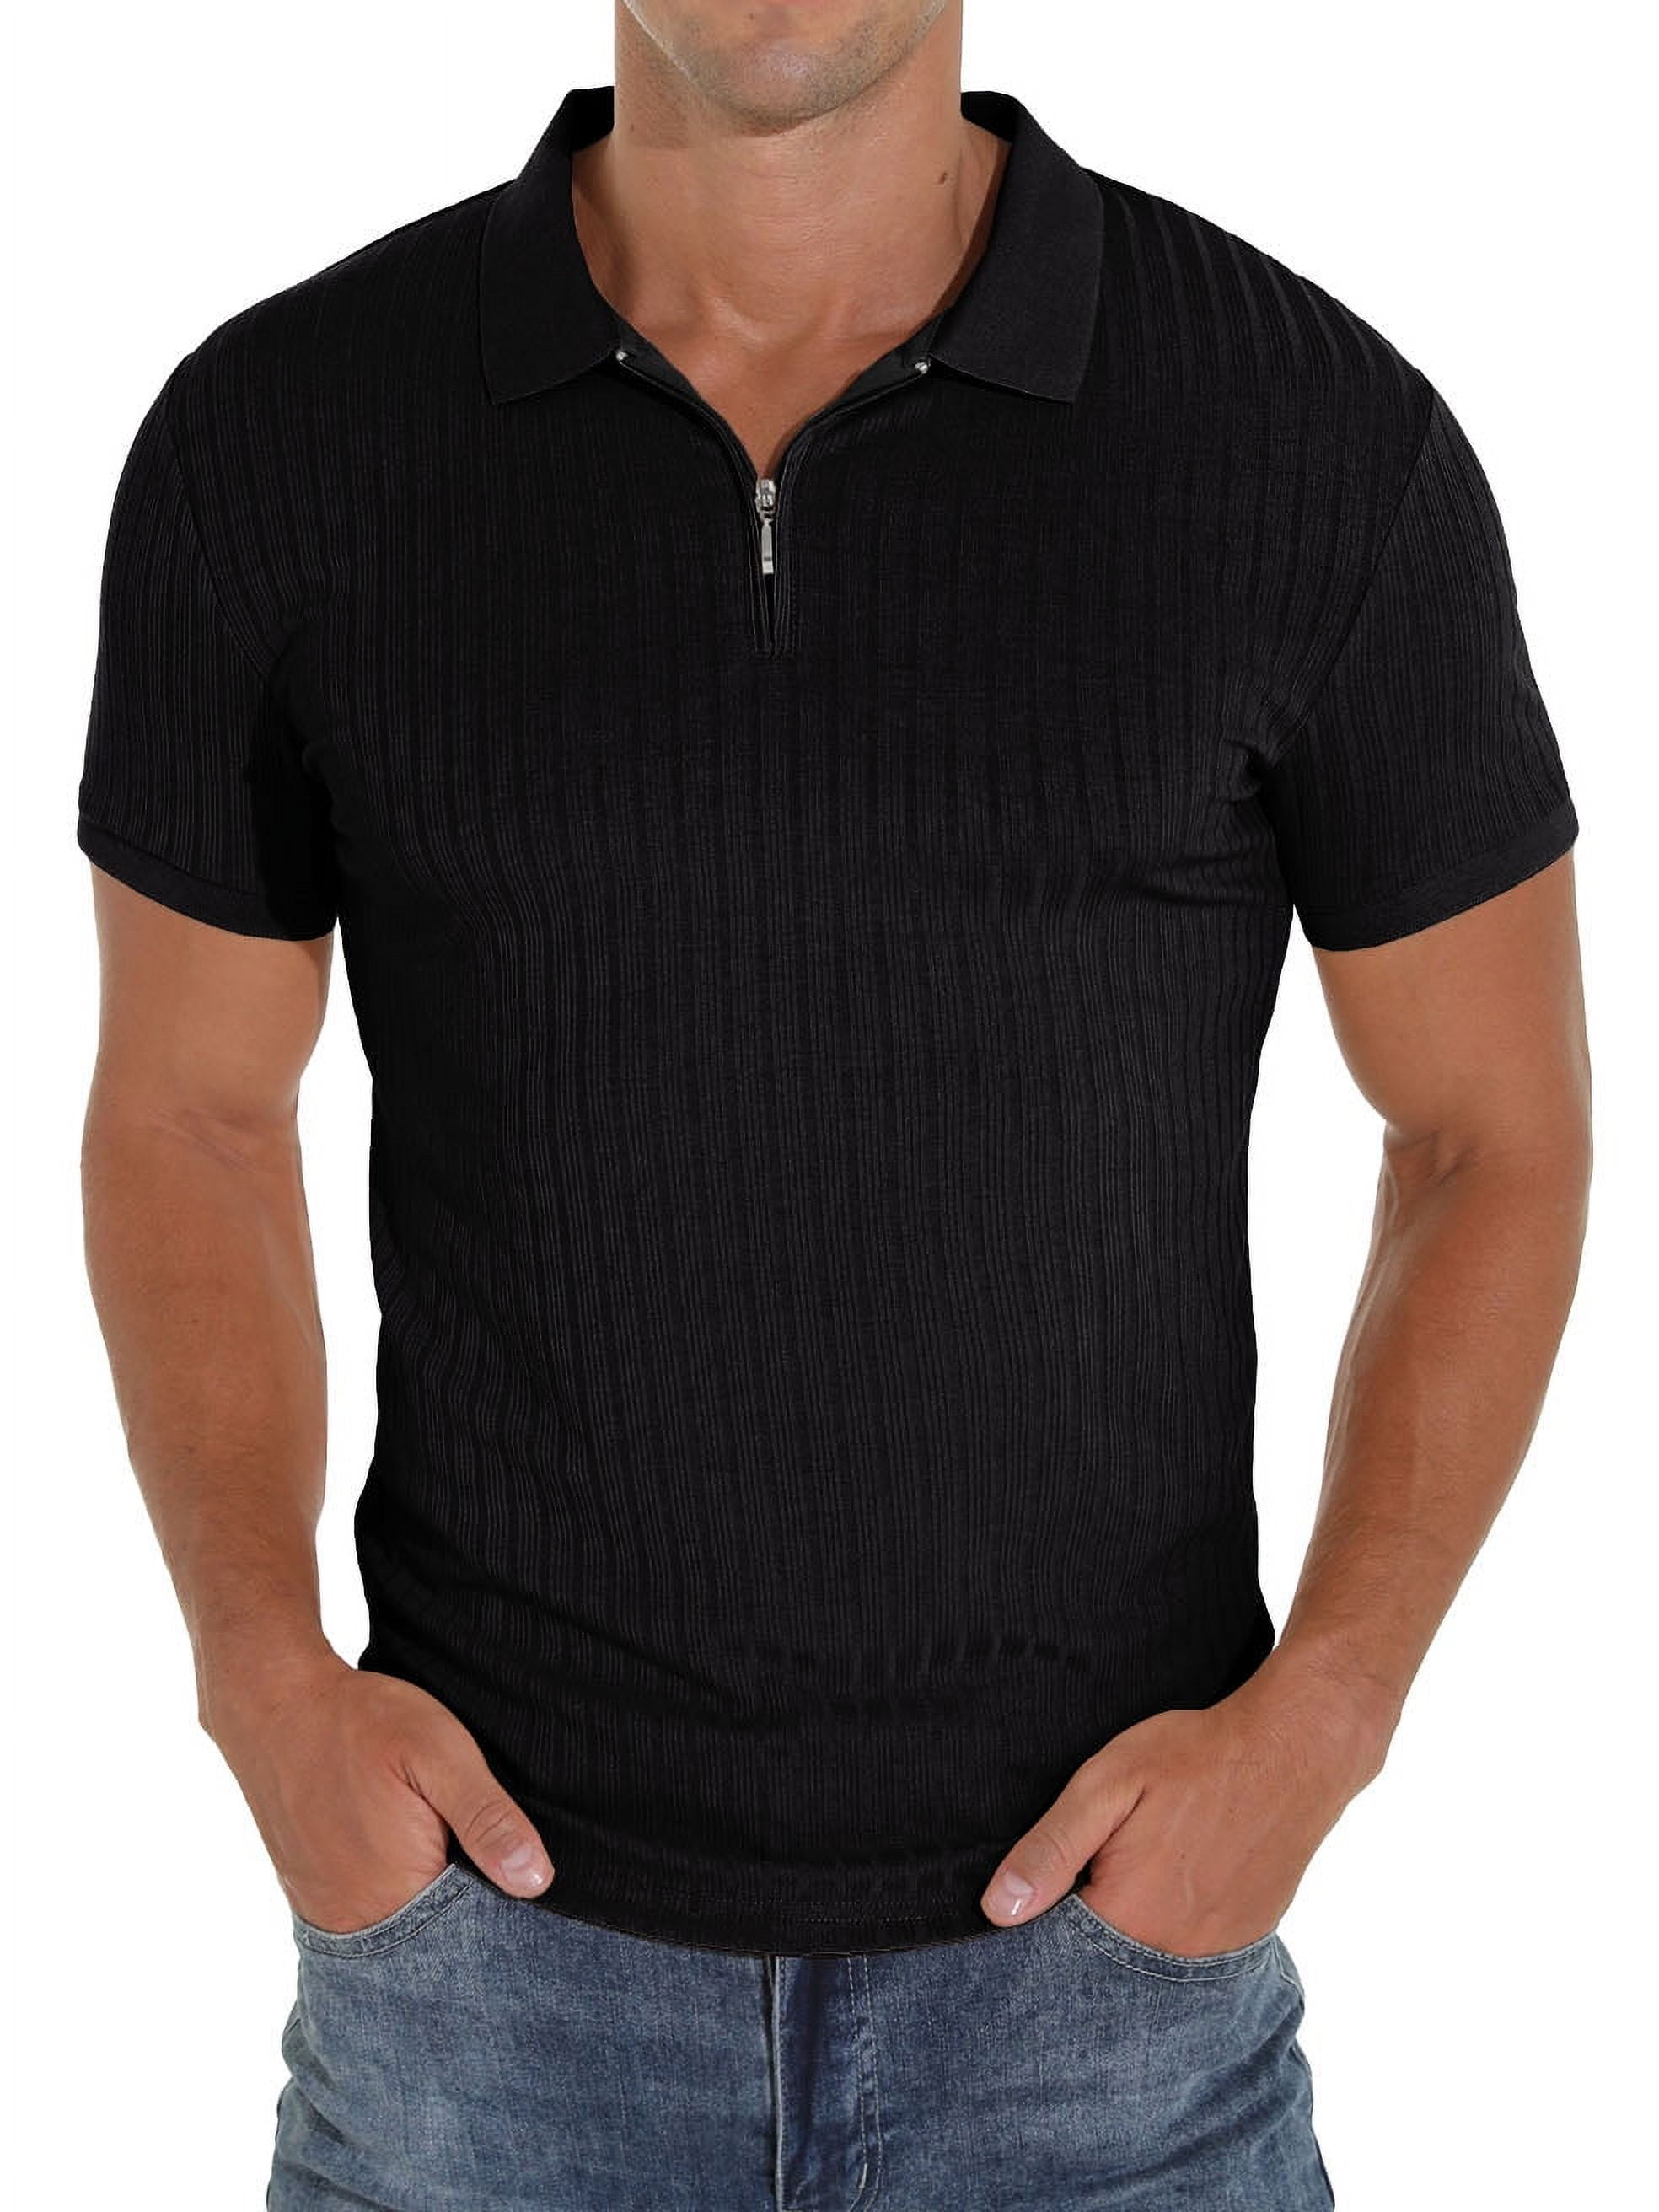 GIRUNS Zipper Polo Shirts for Men Short Sleeve Slim Fit Shirts Casual ...